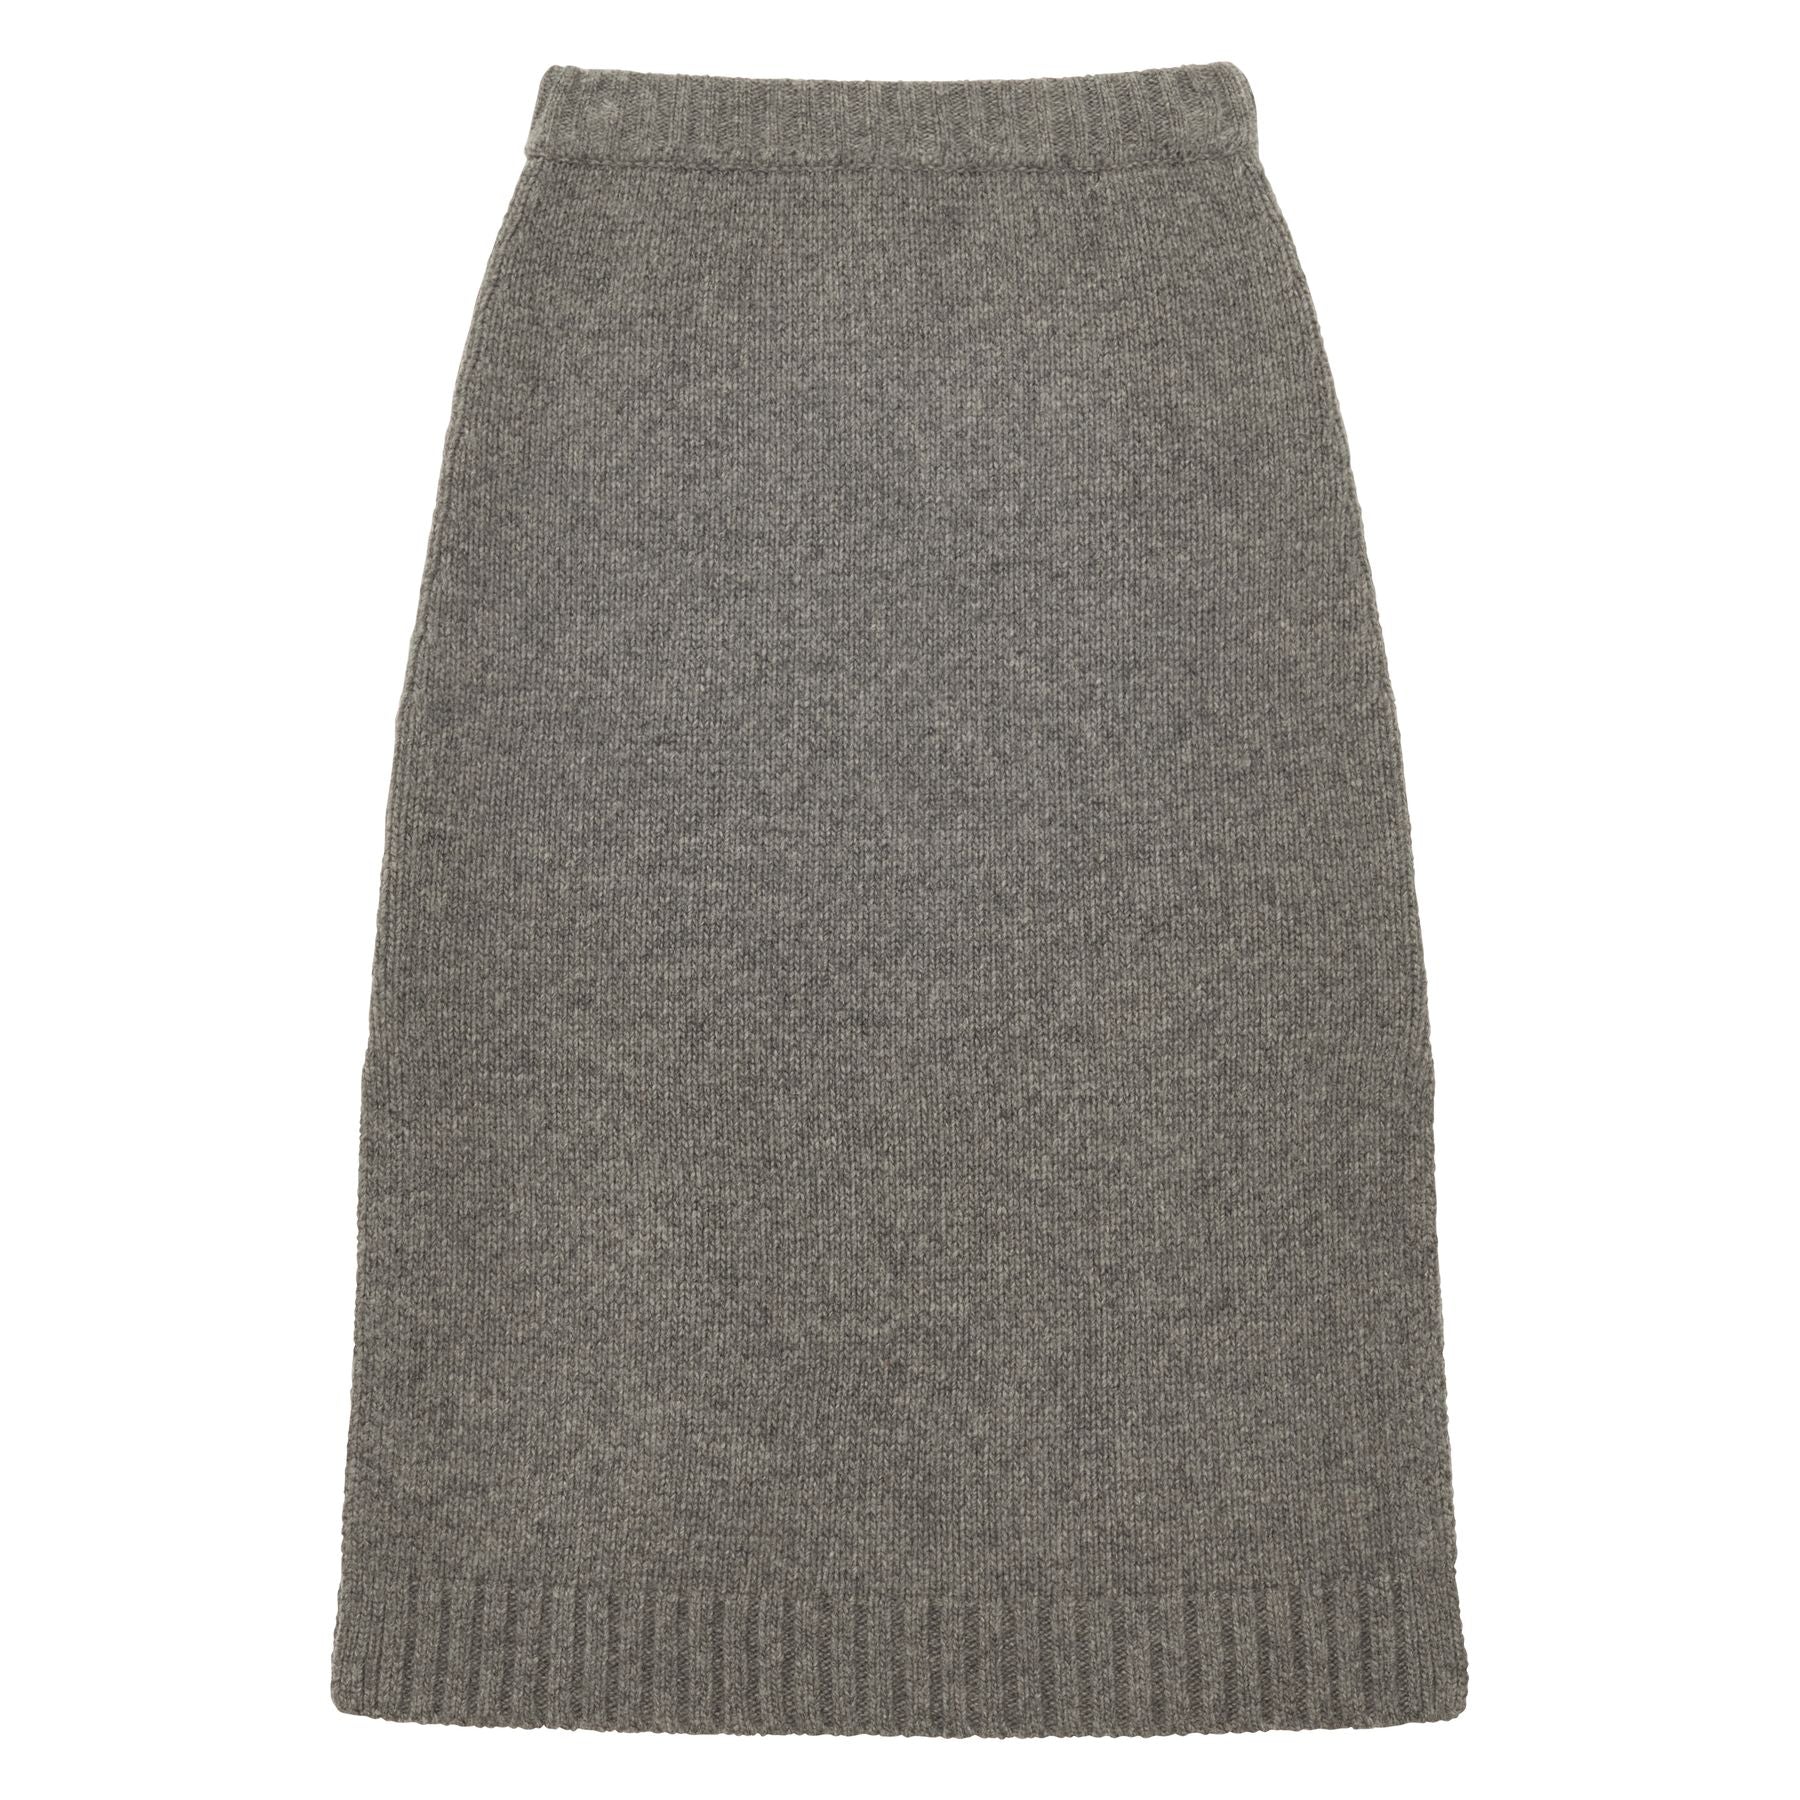 skirt-damia-cashmere-rws-gray